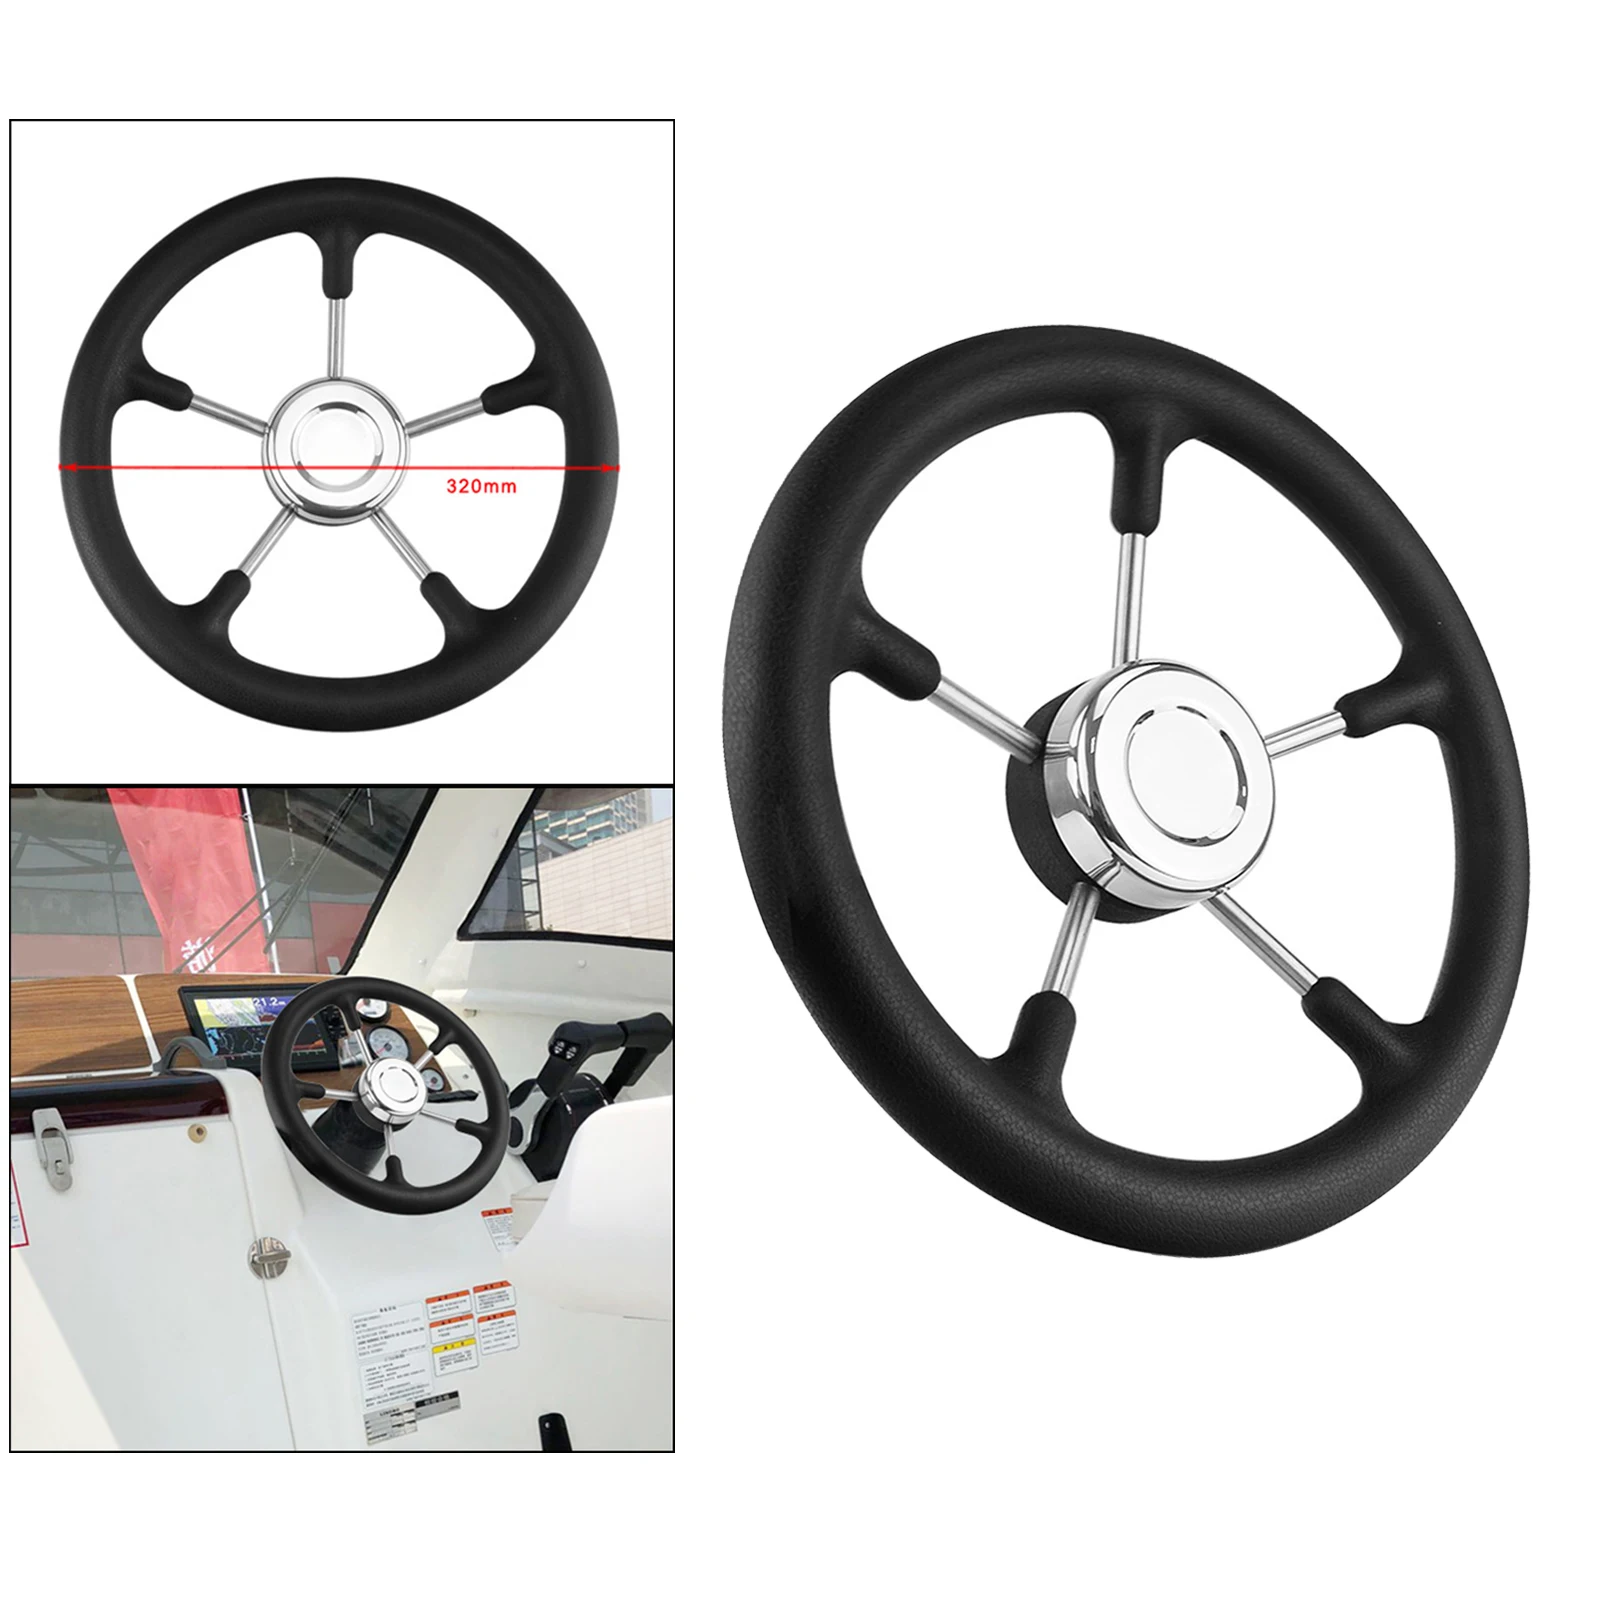 304 Stainless Steel 320mm 12.6 inch Boat Steering Wheel 5 Spoke PU Foaming Material 3/4